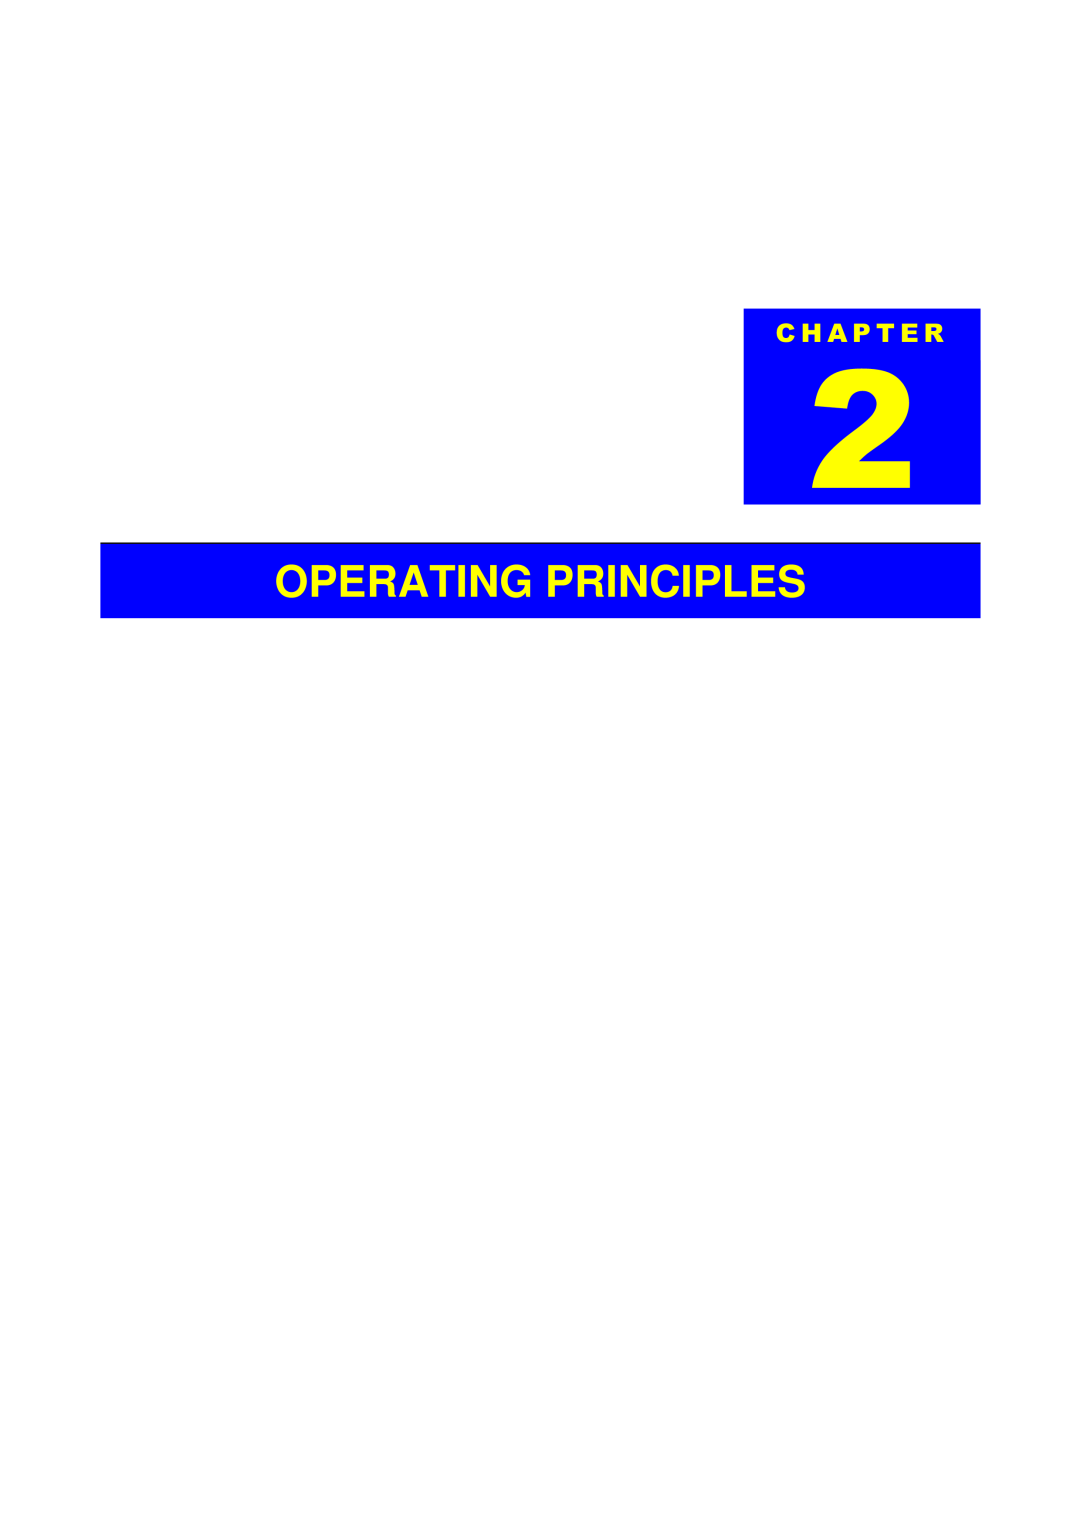 Epson EX, 700 manual Operating Principles, + $ 